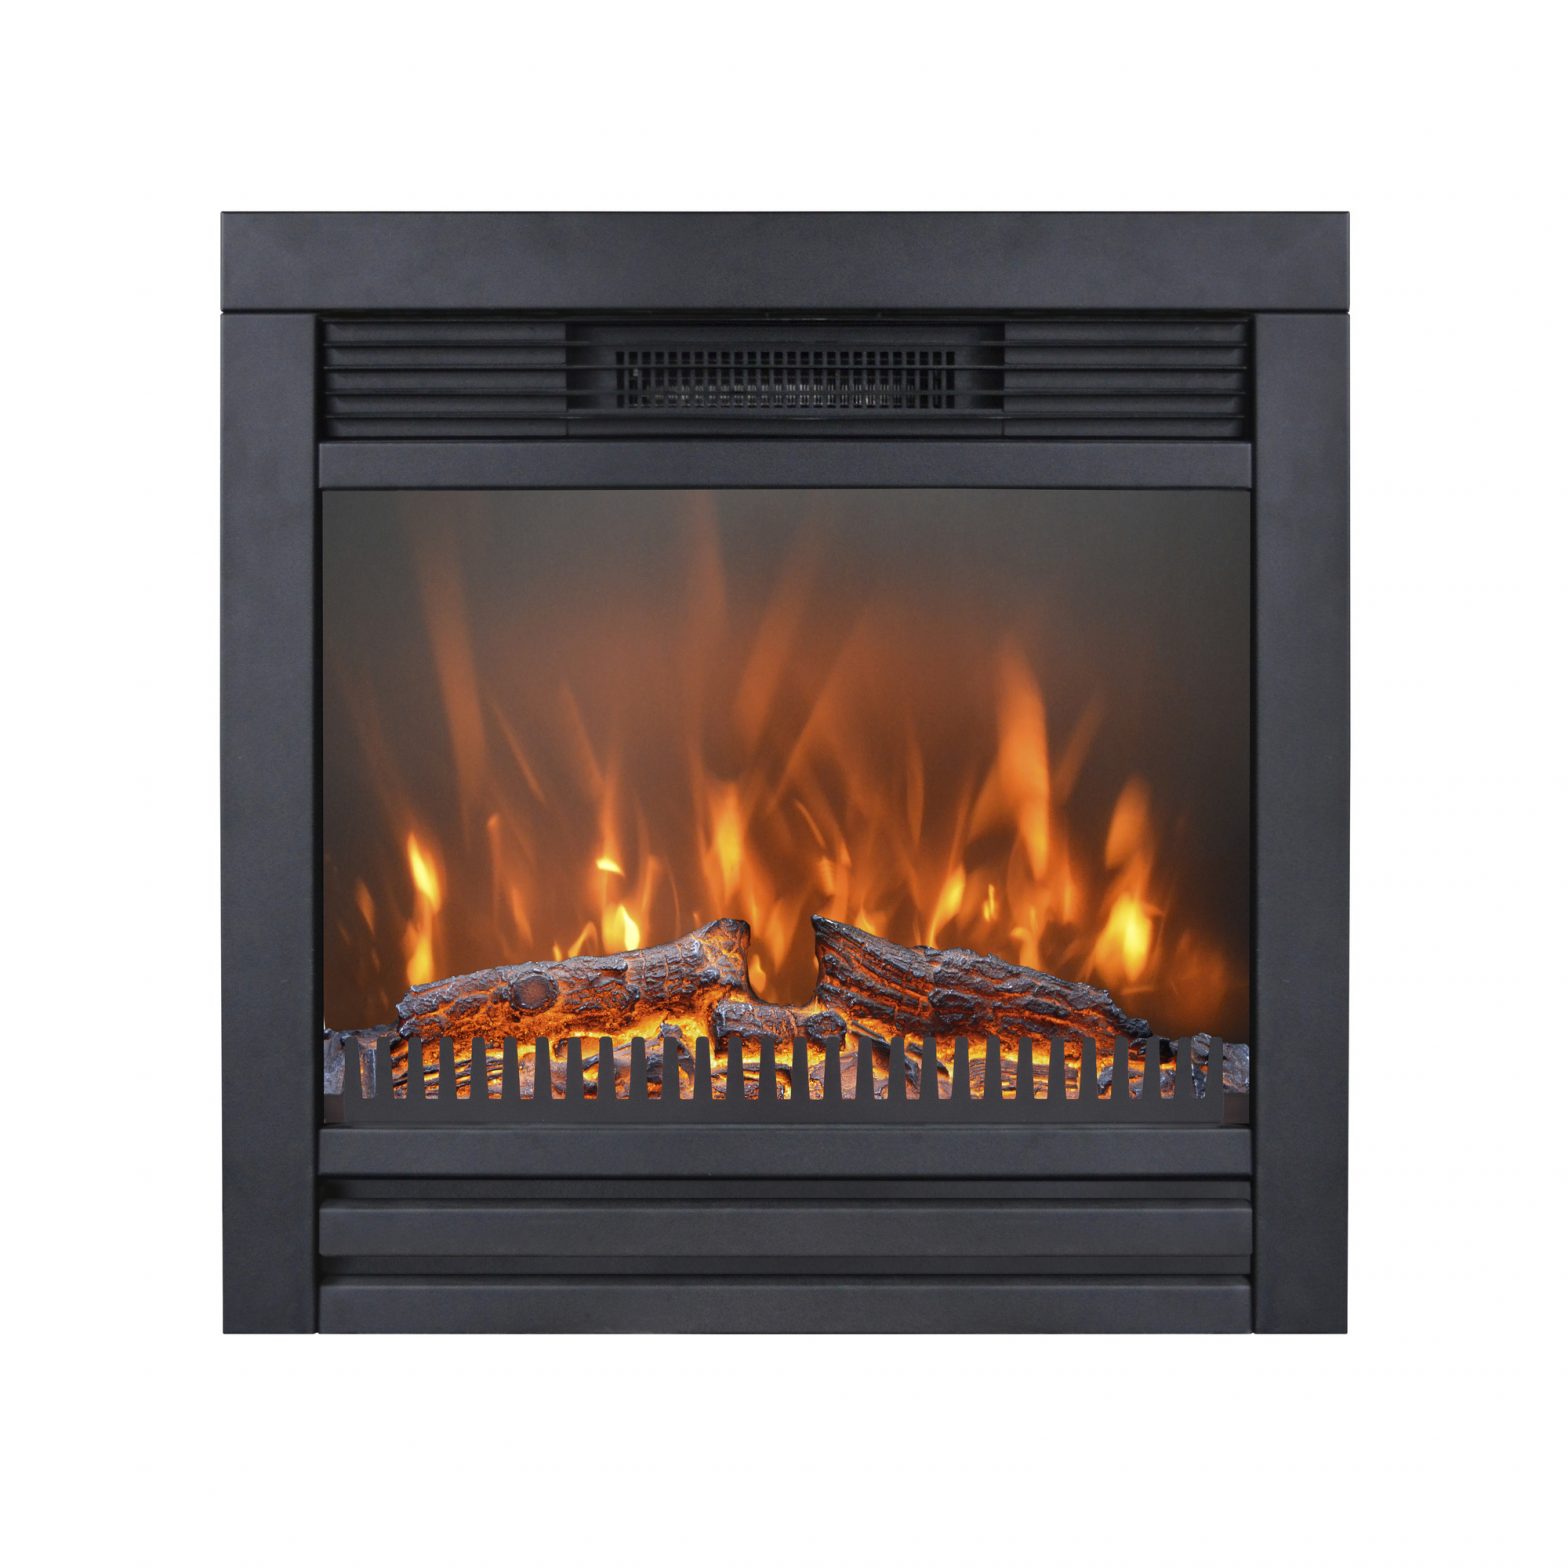 Xaralyn Electric Fireplaces User Manual